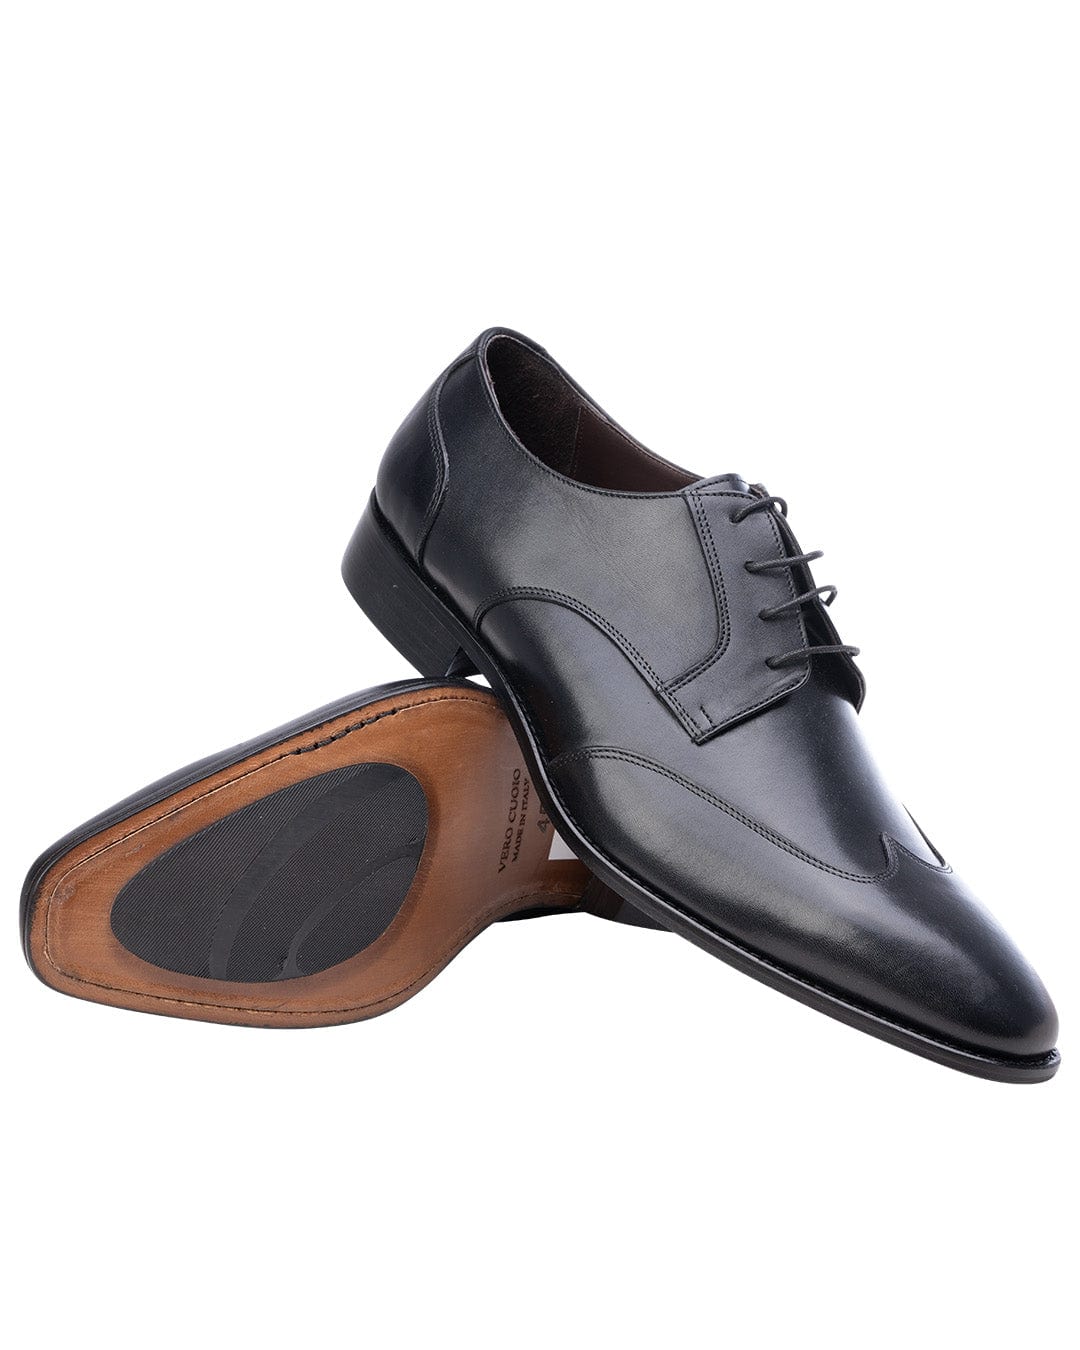 Gagliardi Shoes Gagliardi Black Made in Italy Wing Tip Oxford Shoes